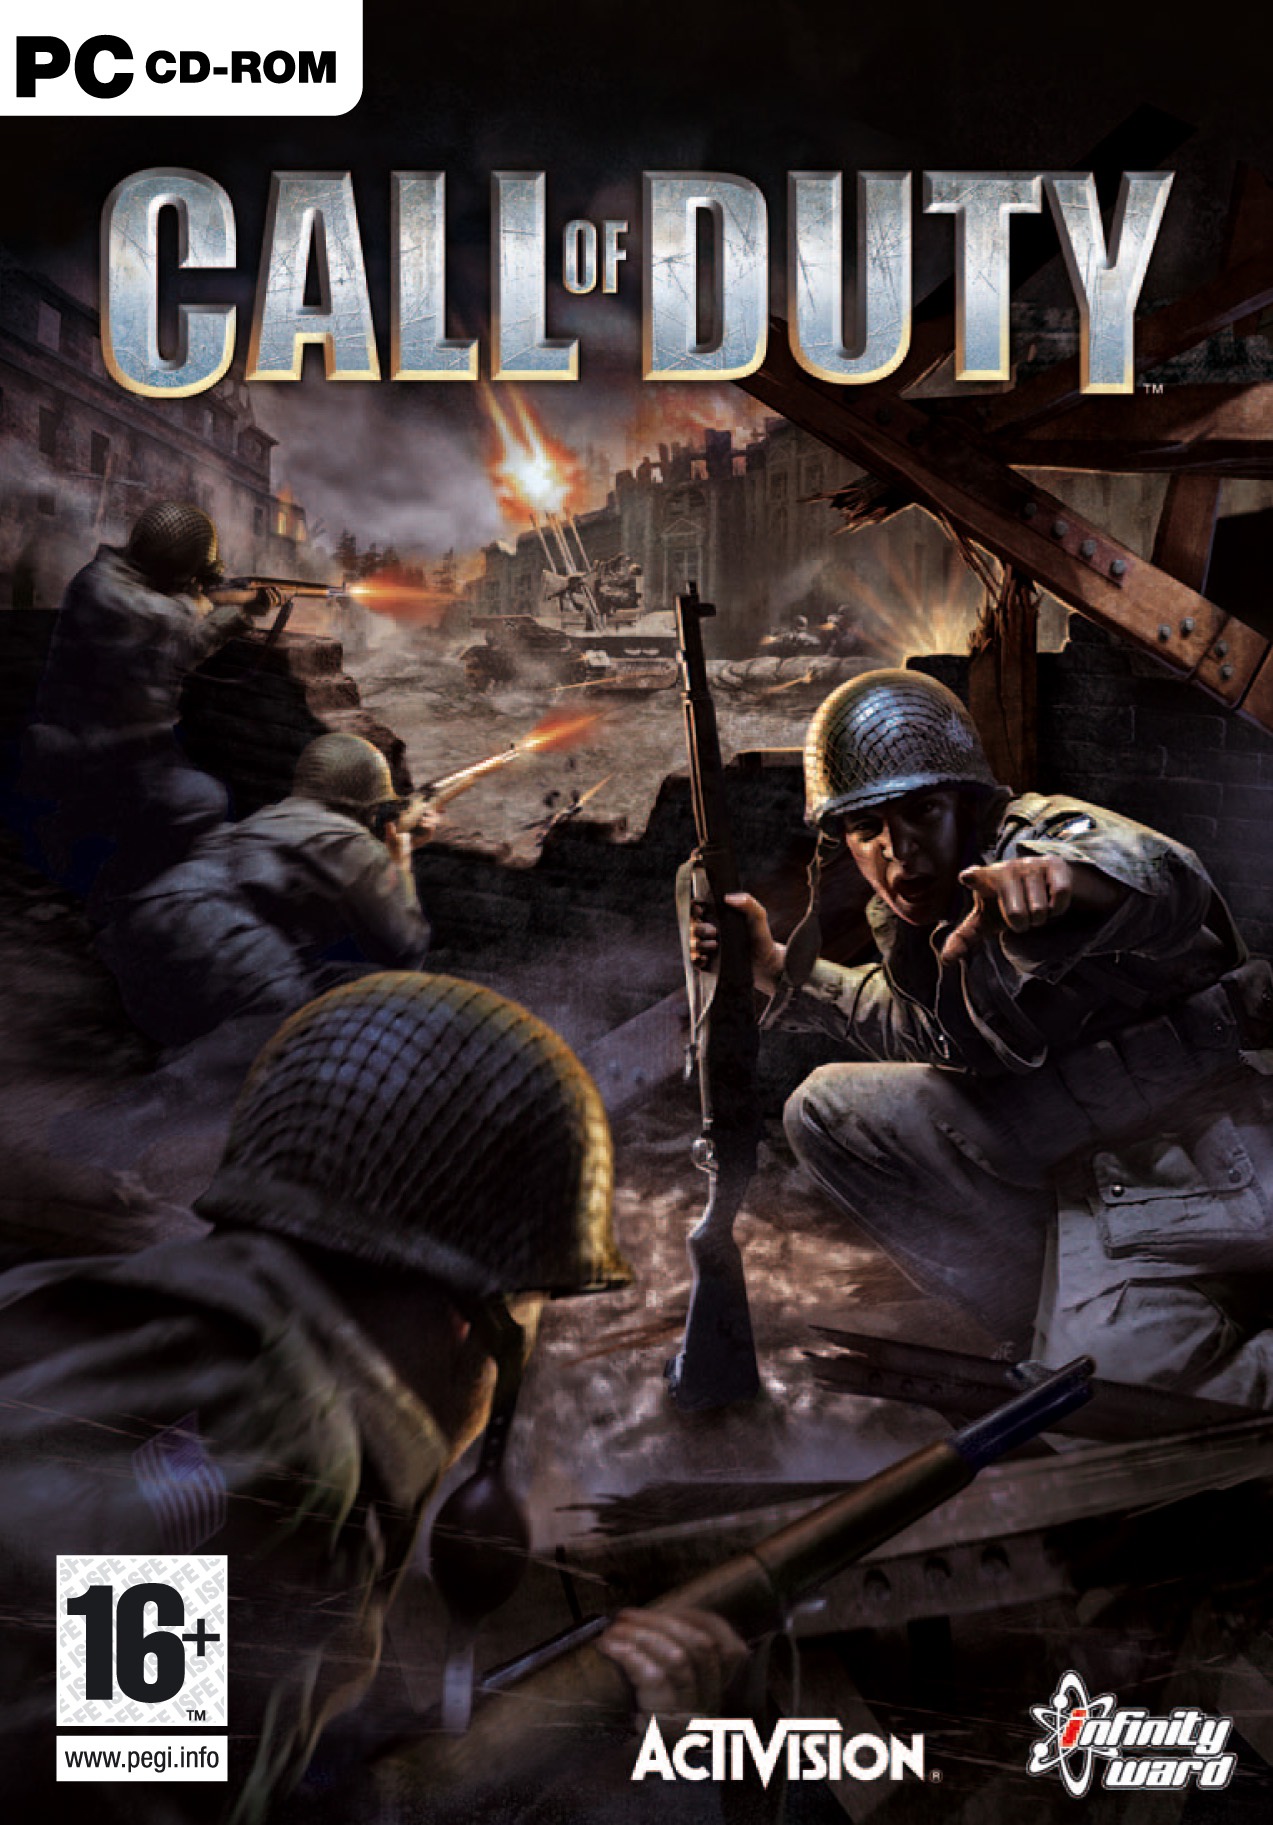 Call of Duty | Call of Duty Wiki | FANDOM powered by Wikia - 